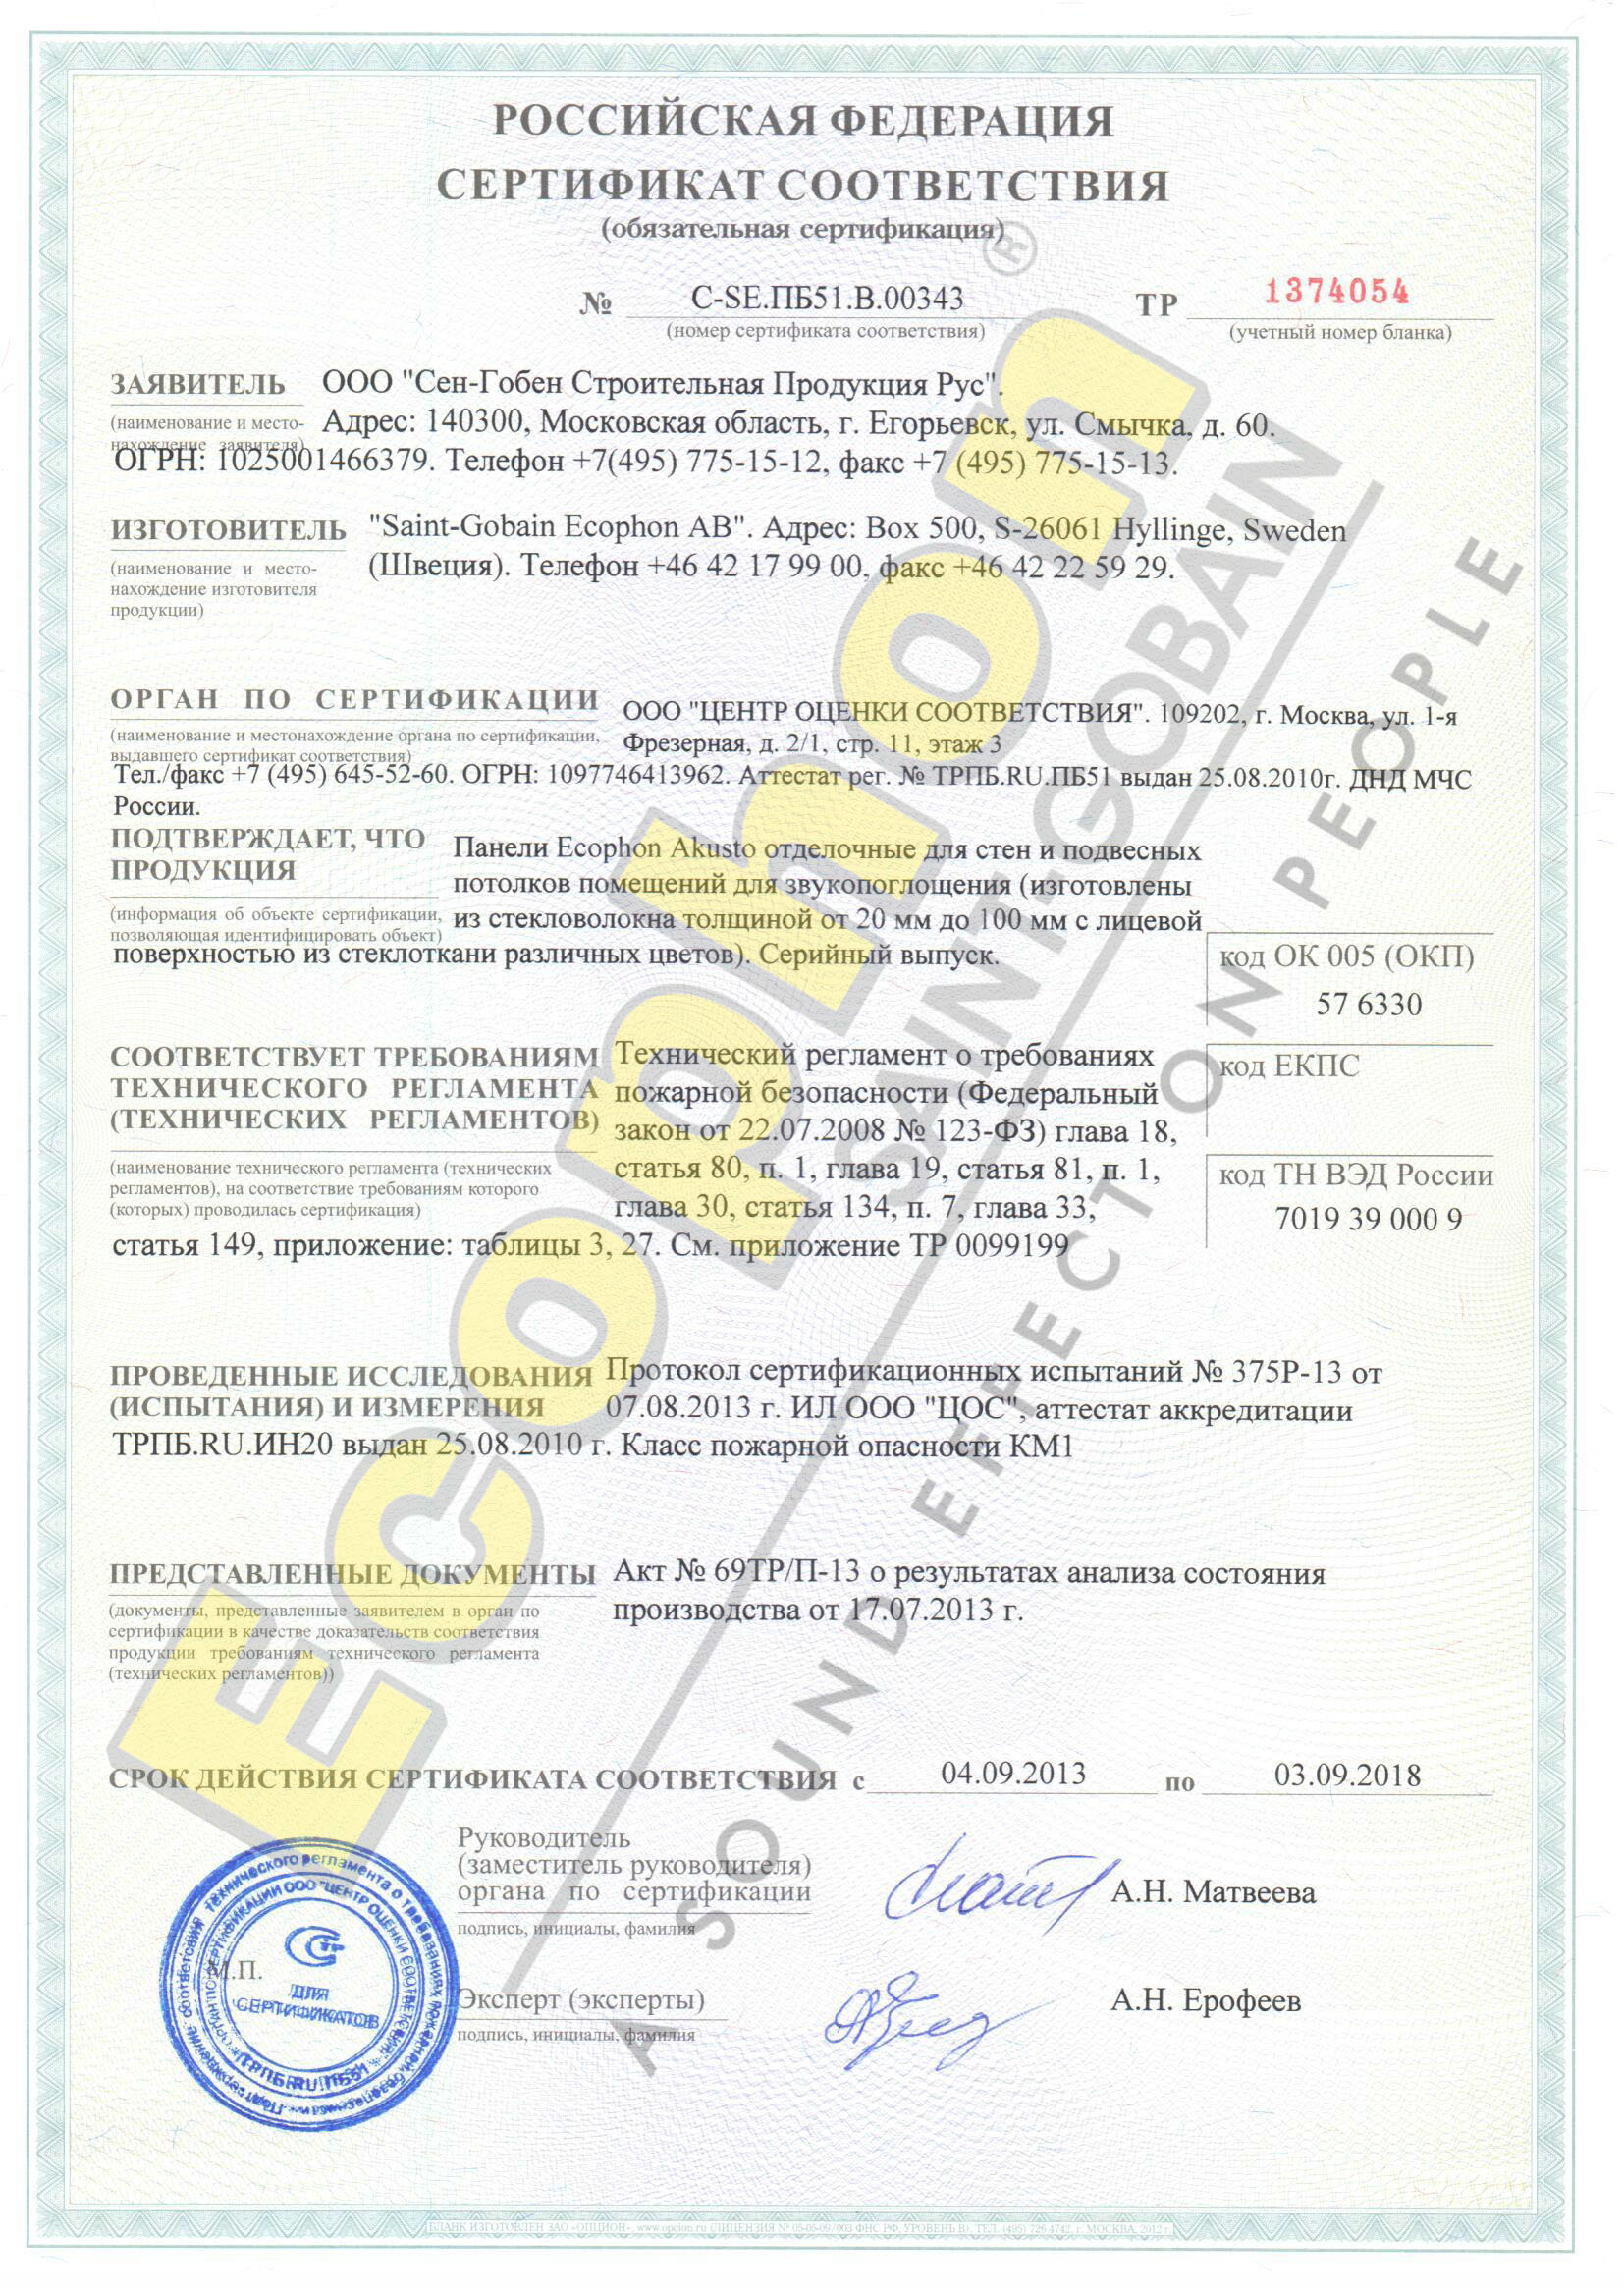 Сертификат соответствия ( панели Ecophon Akusto)